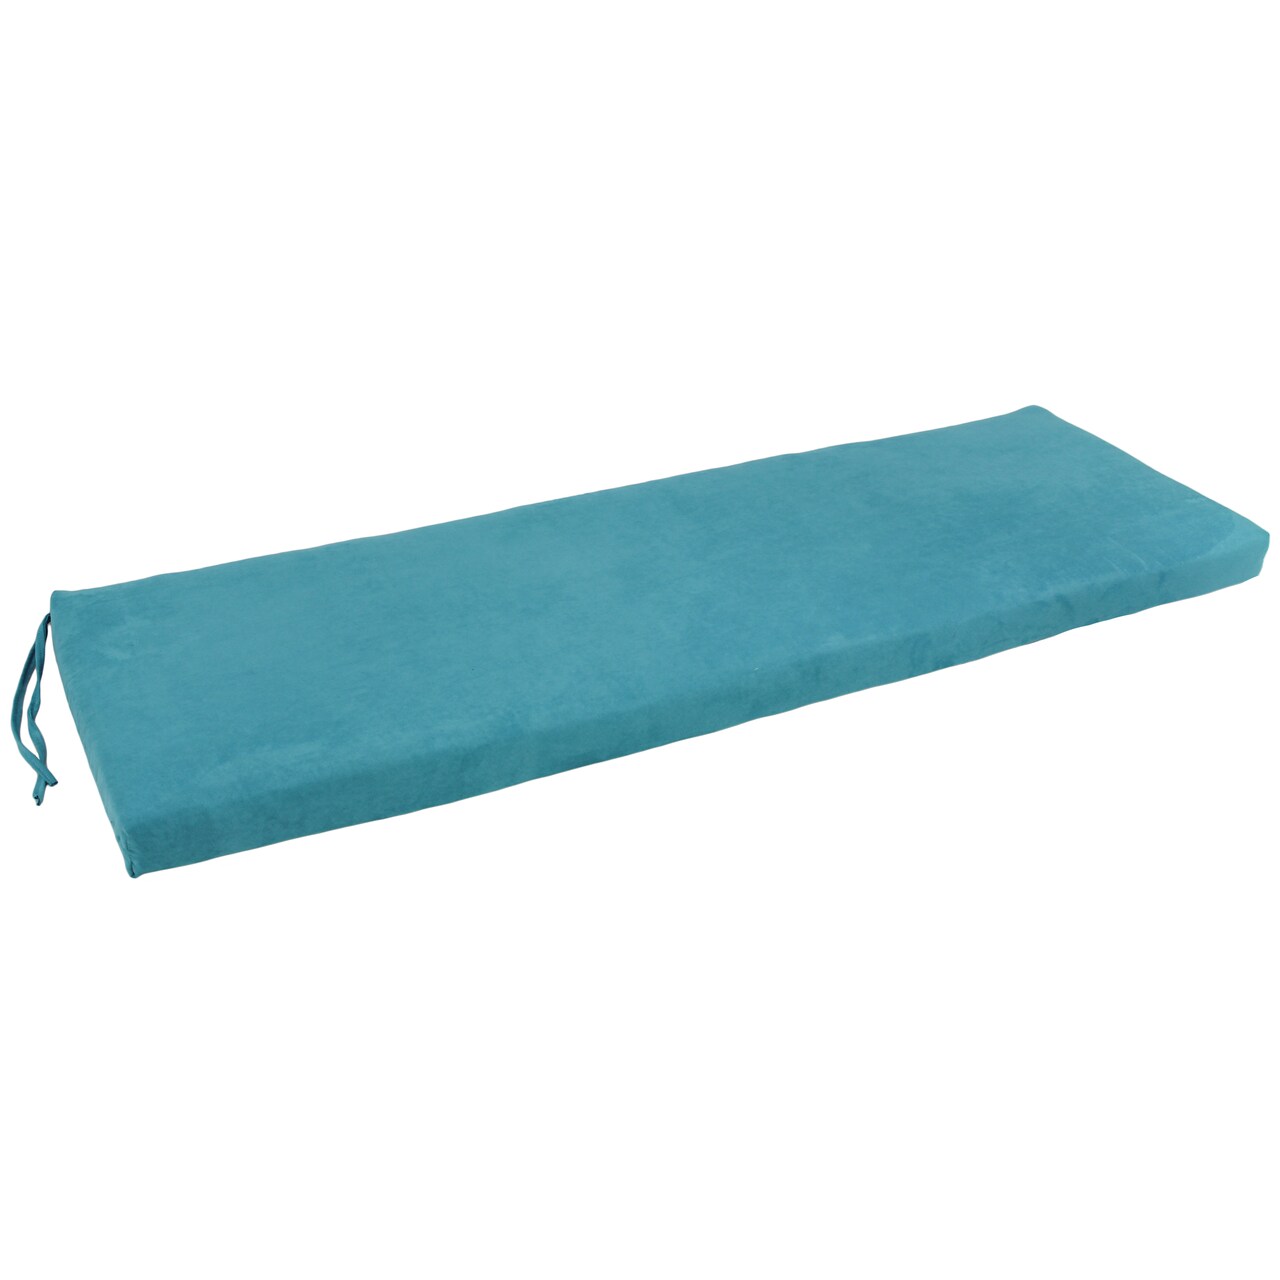 60-inch by 19-inch Micro Suede Bench Cushion - Aqua Blue